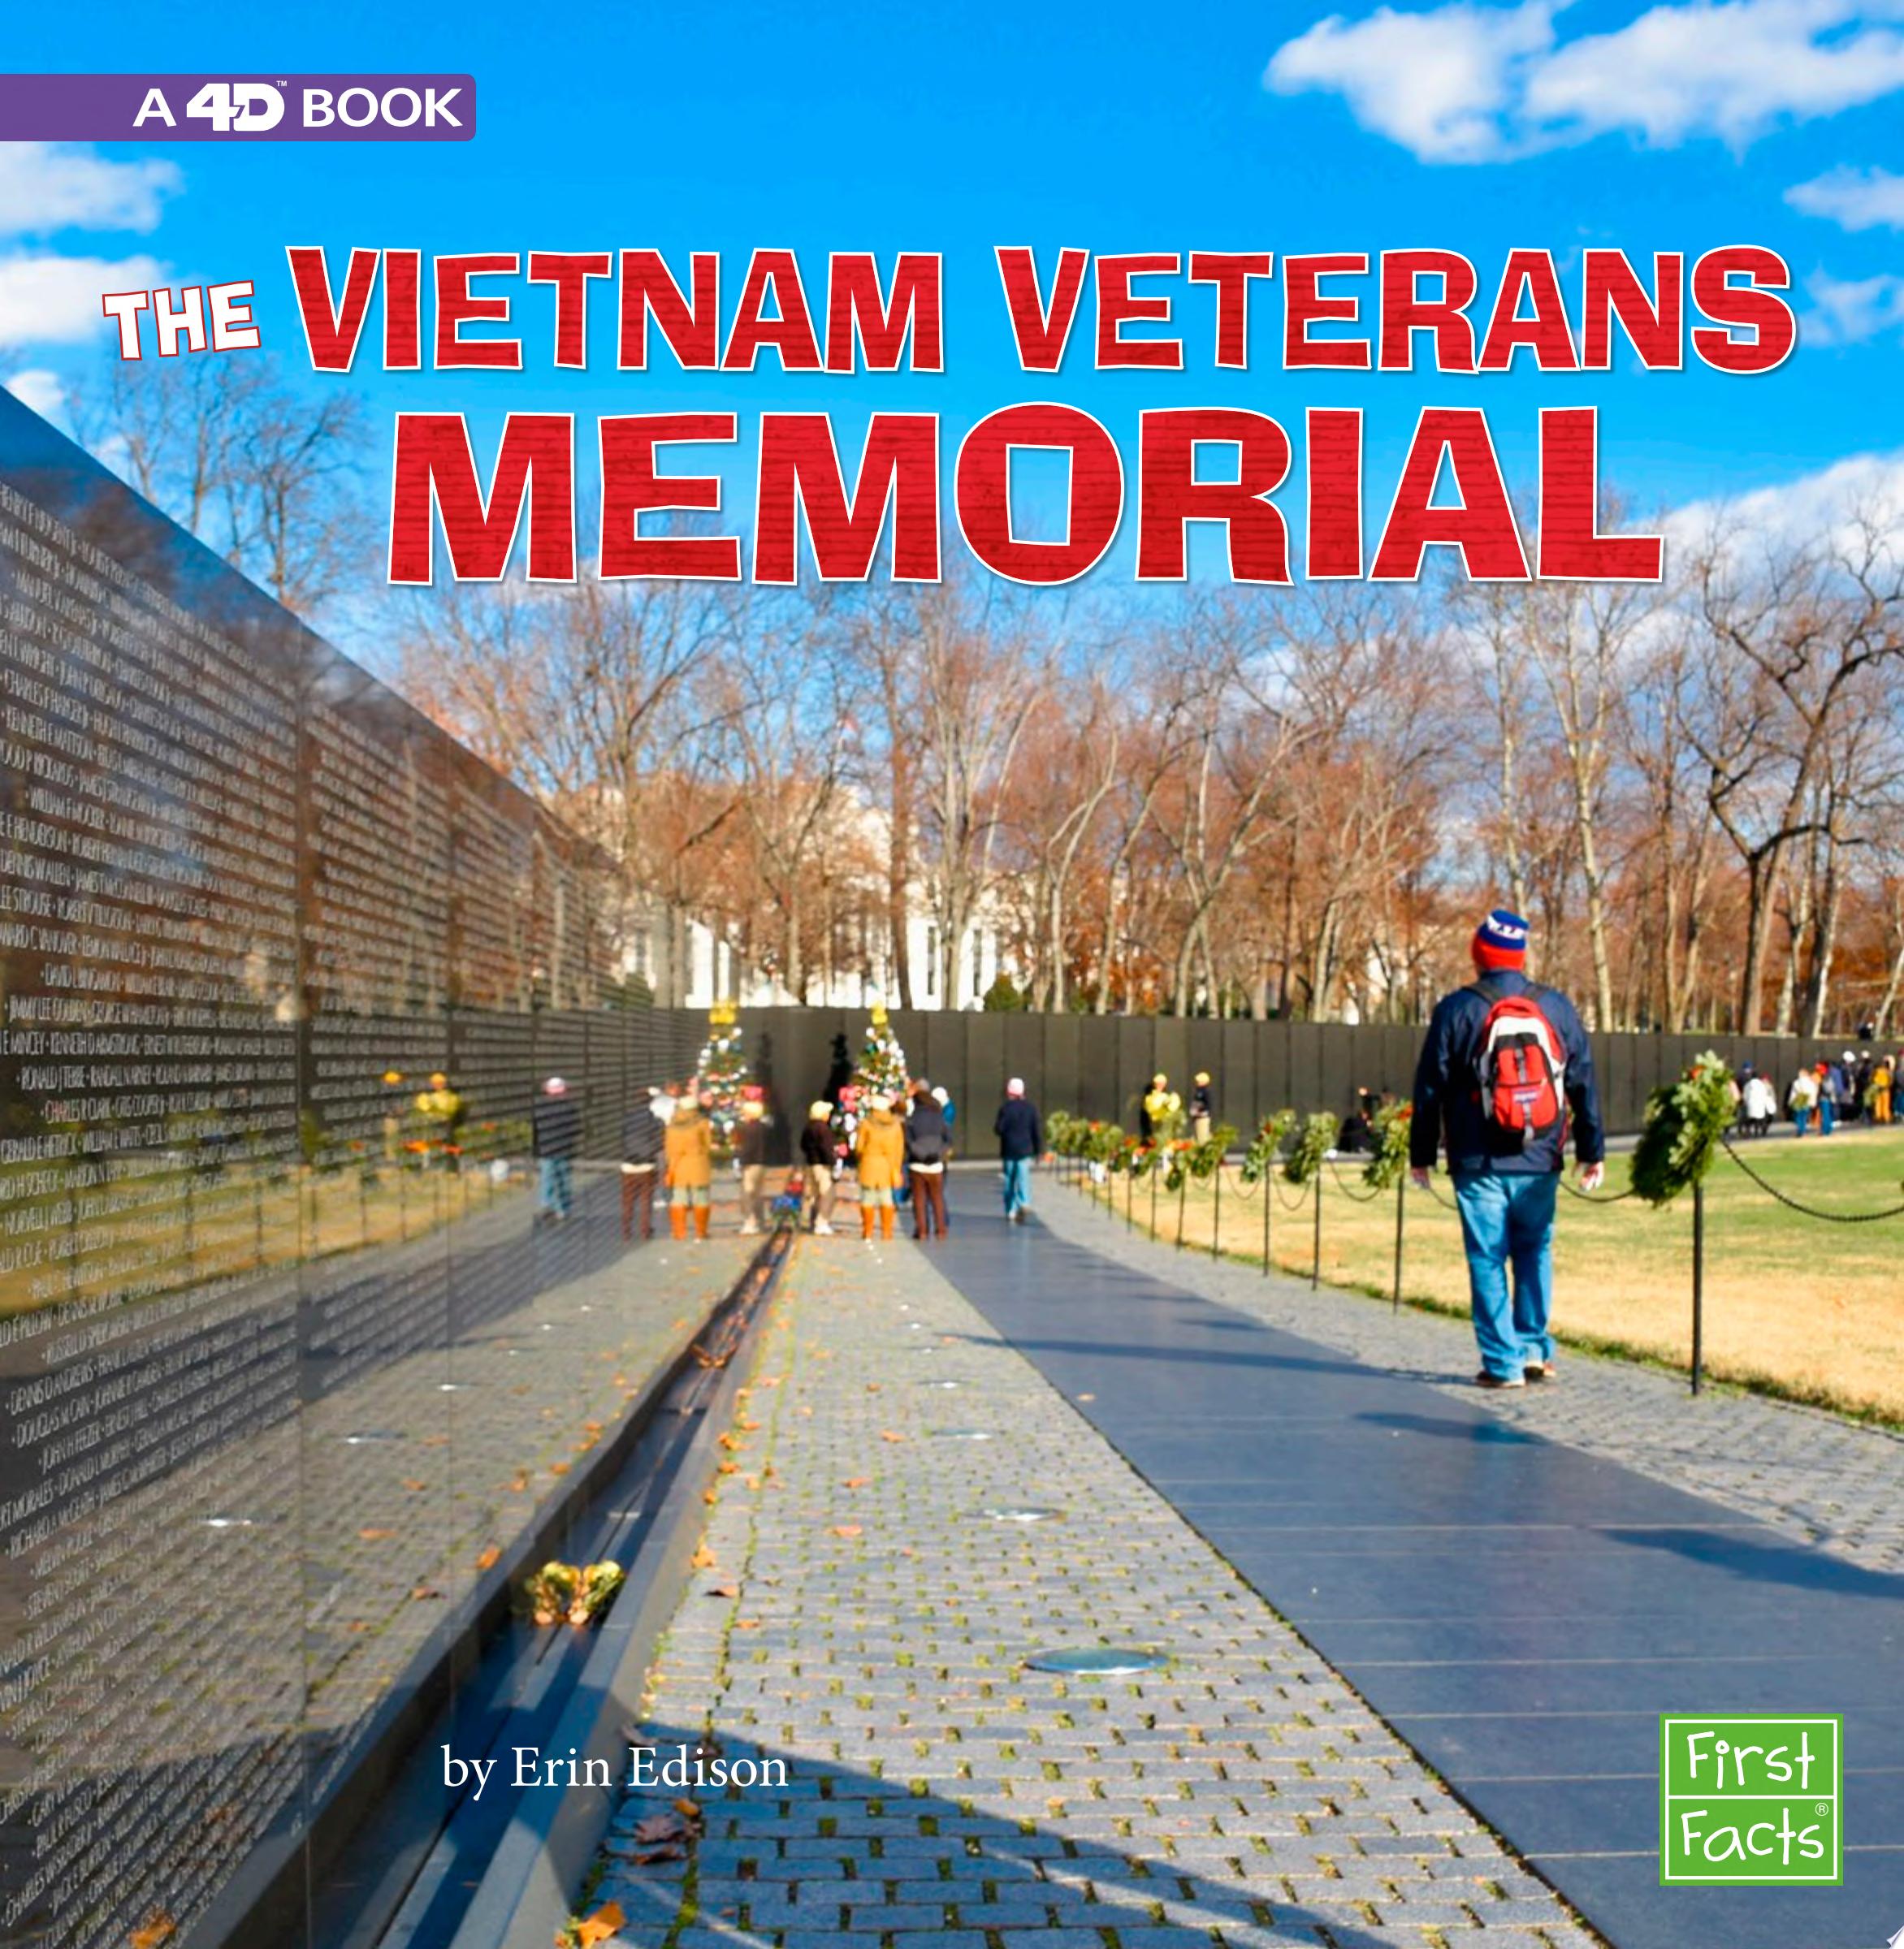 Image for "The Vietnam Veterans Memorial"